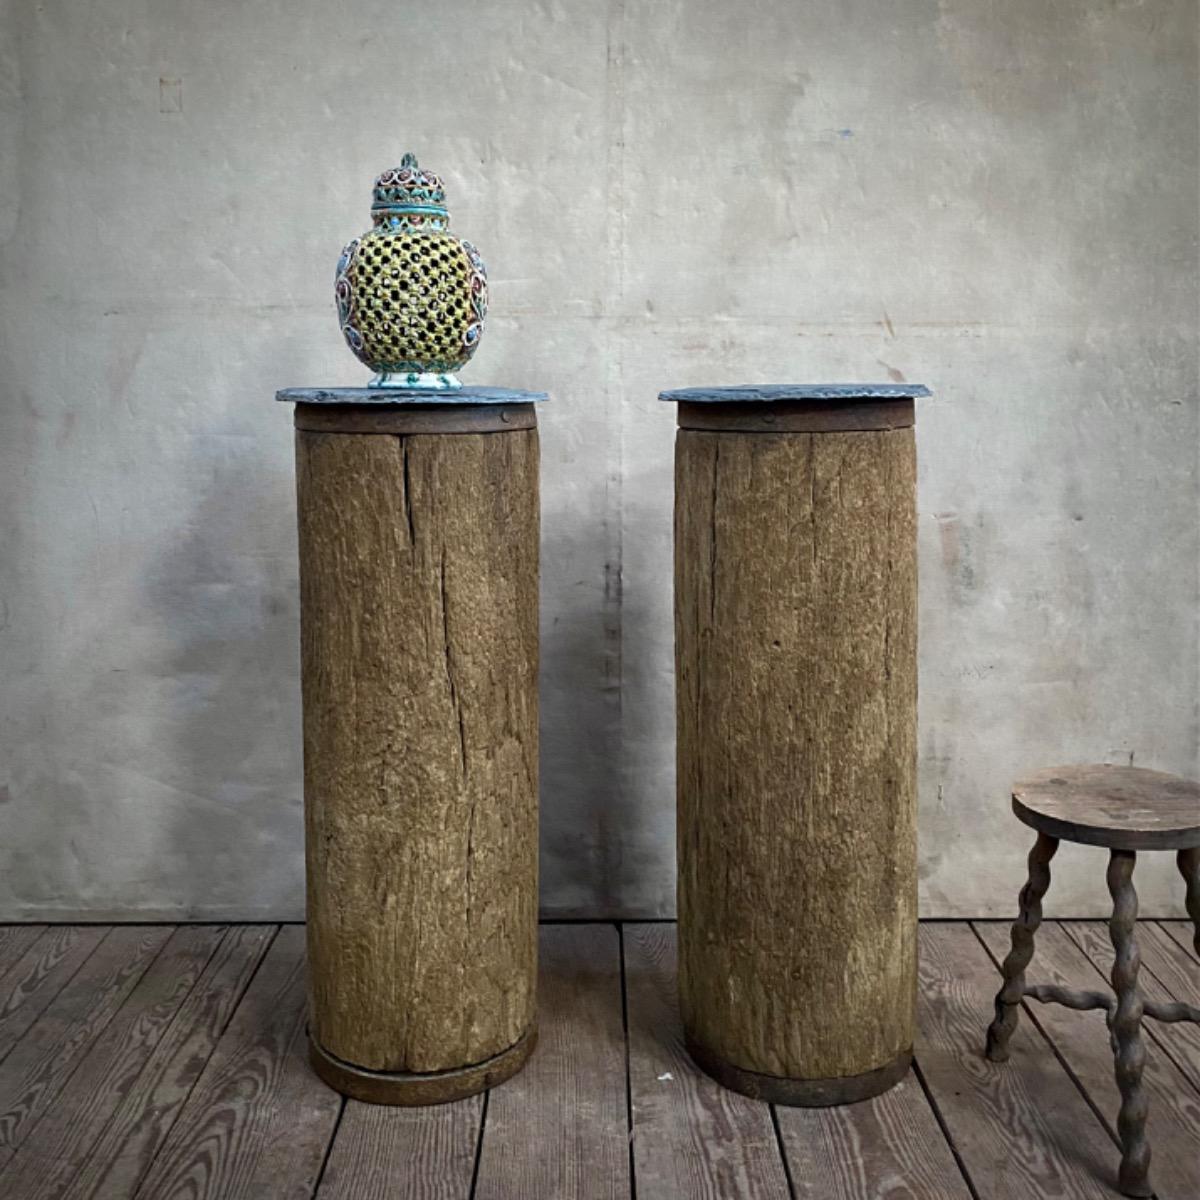 Primitive wooden pedestals